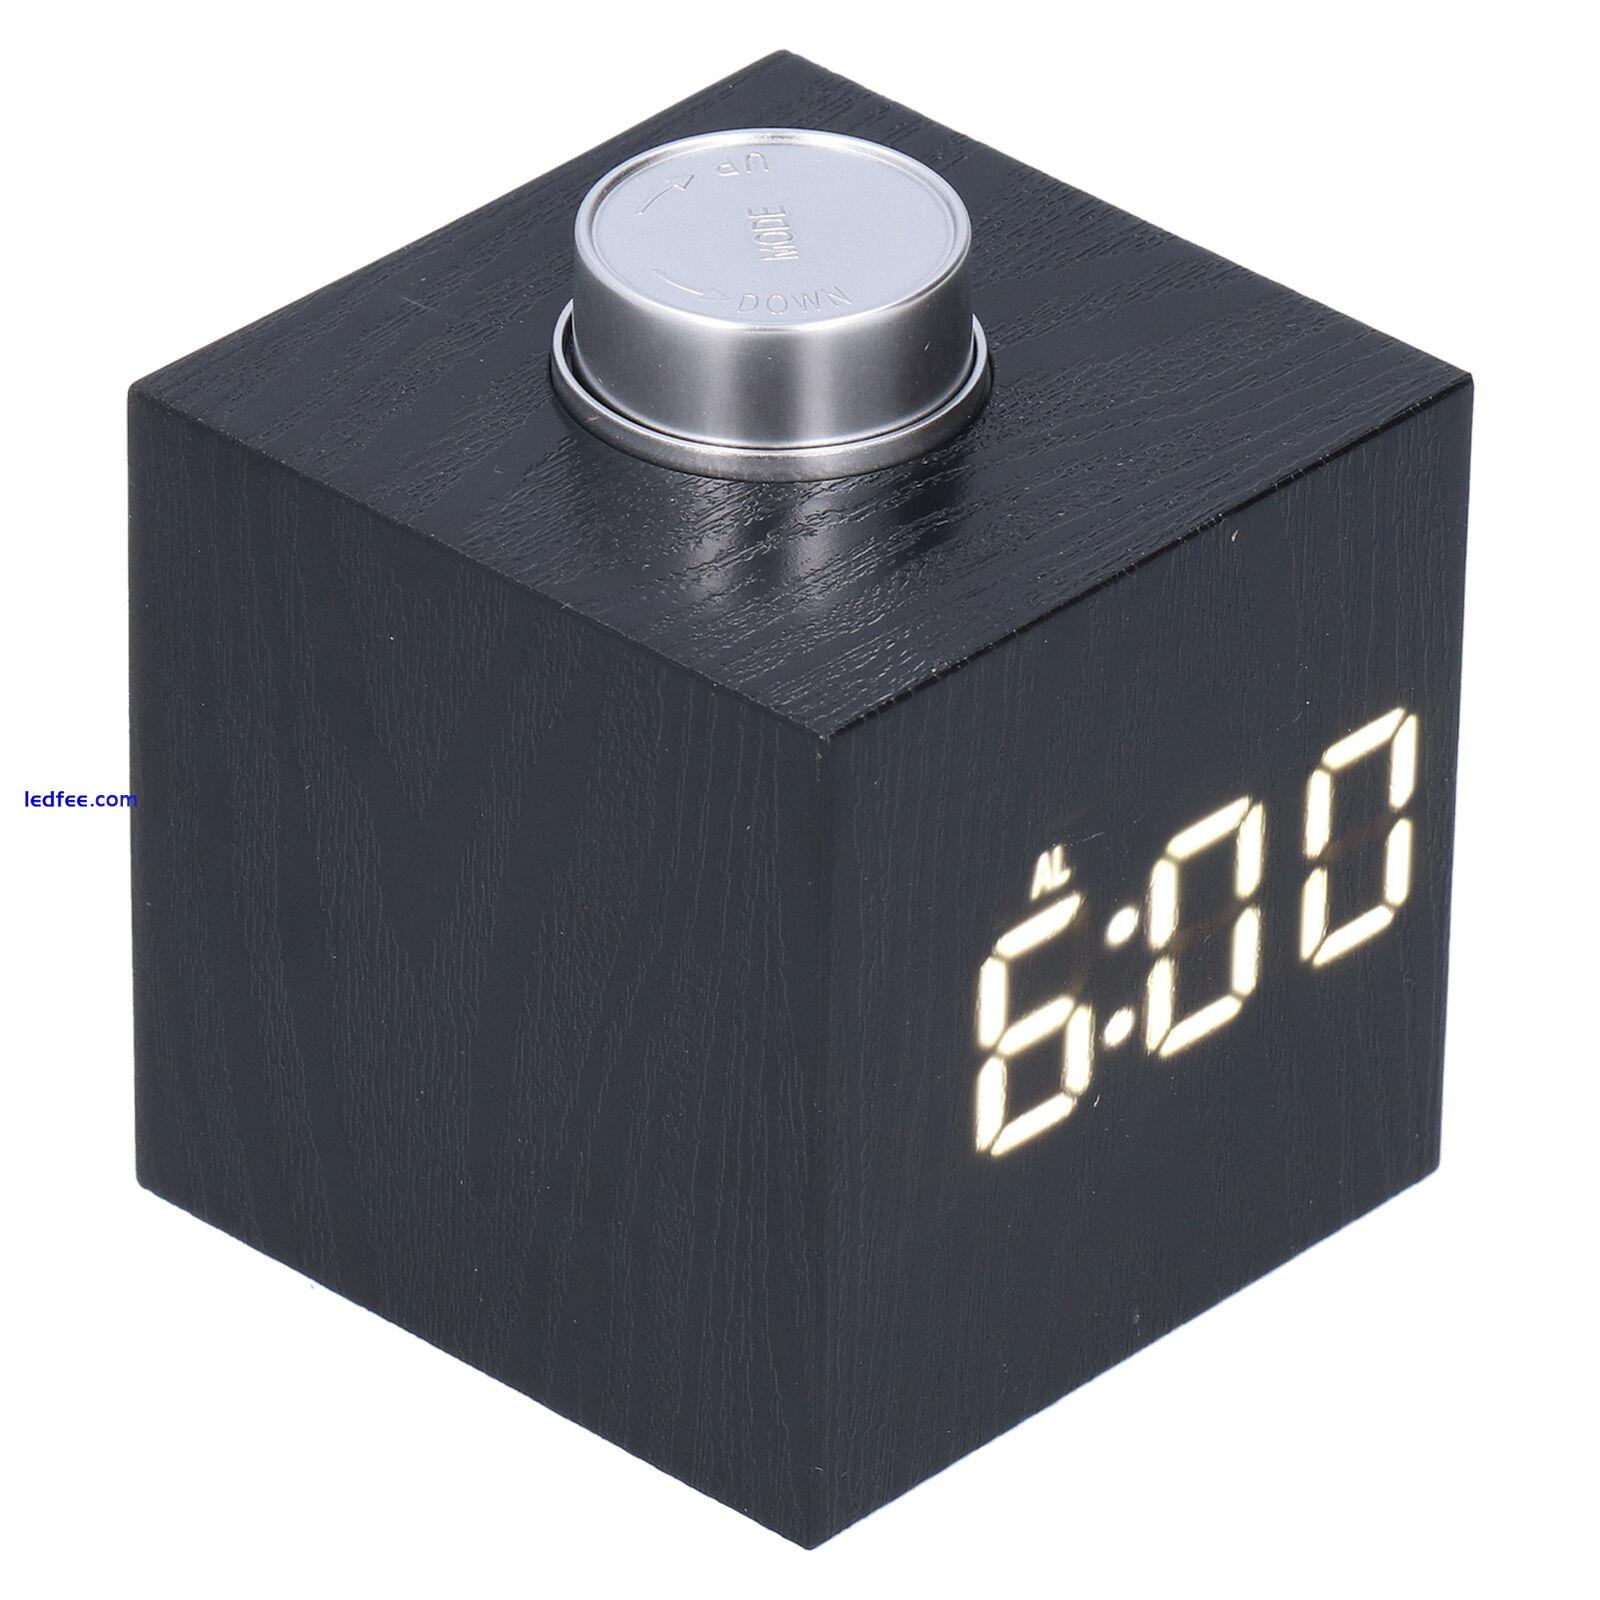 LED Knob Alarm Clock Digital Thermometer Display Imitation Wood Grain Clock JY 2 